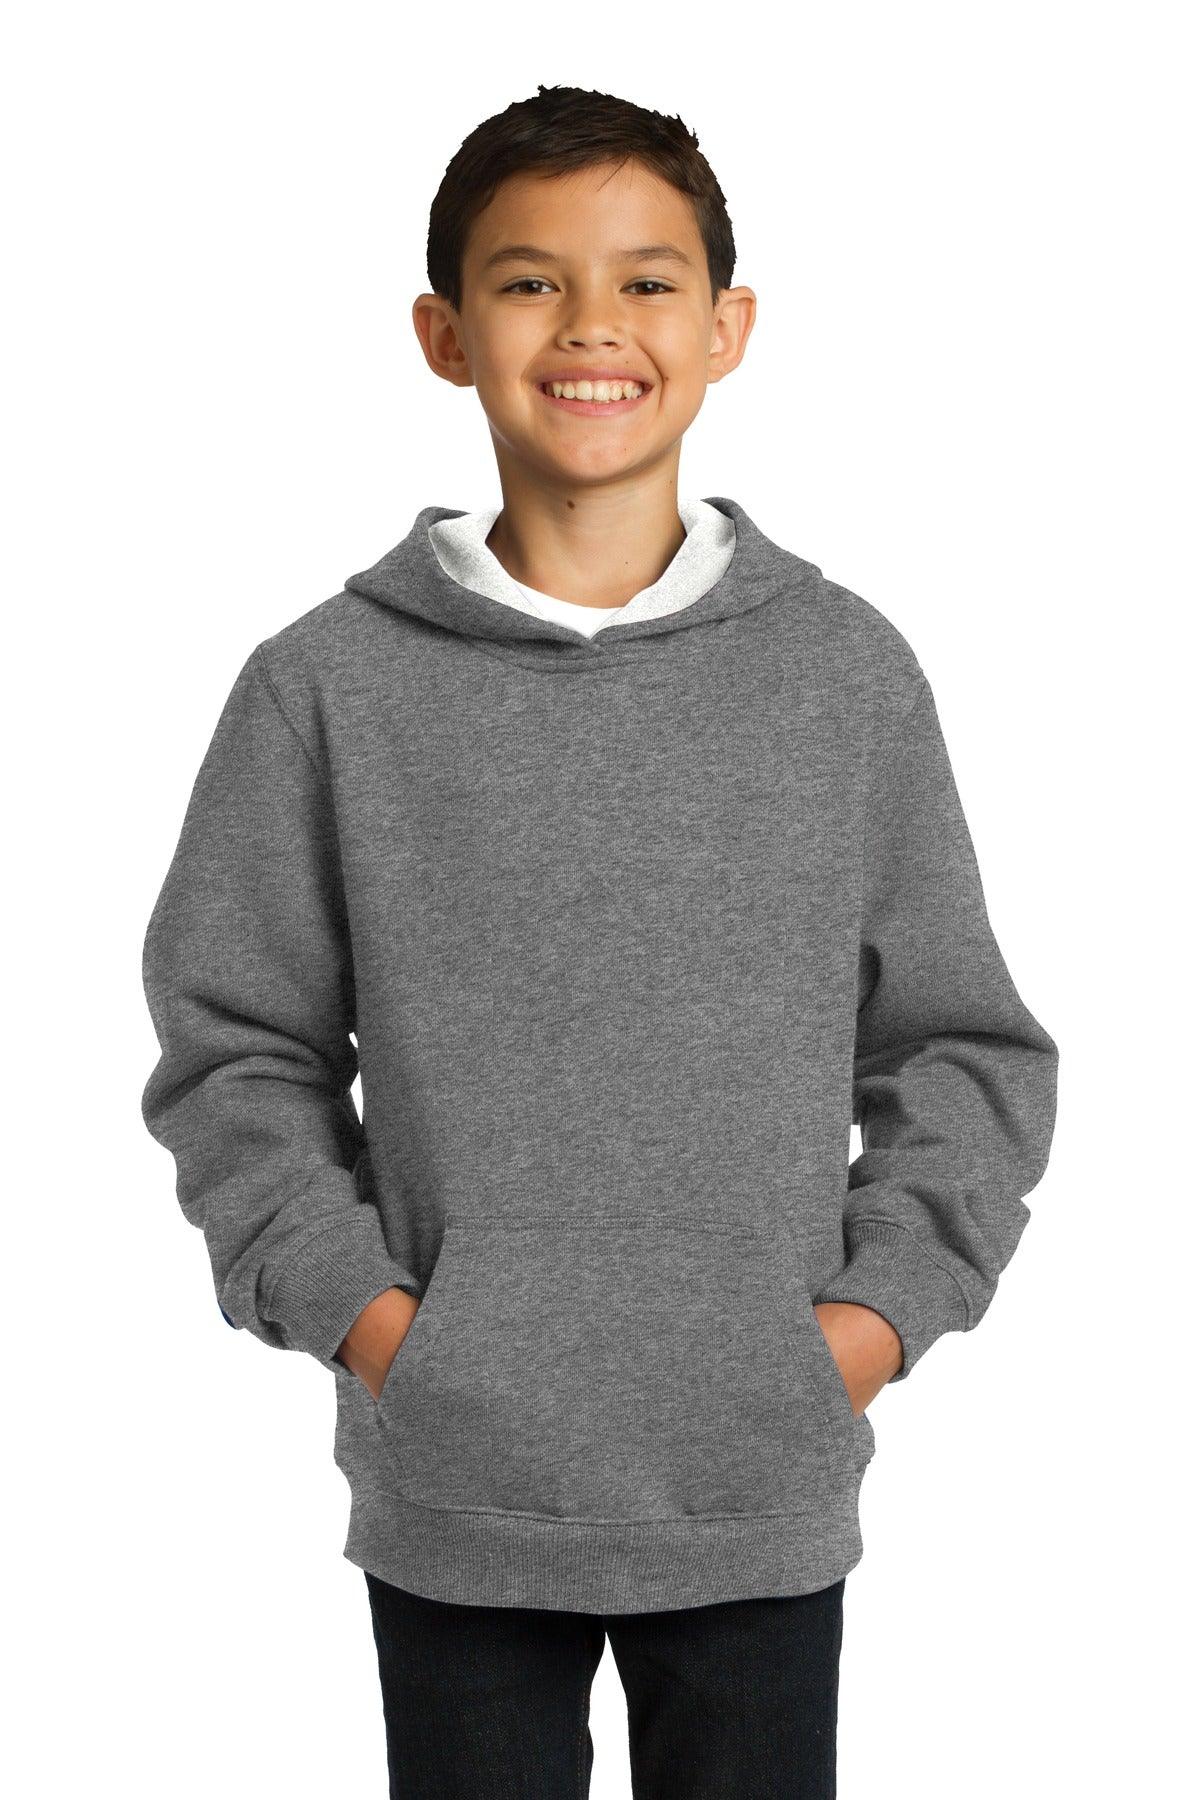 Sport-Tek Youth Pullover Hooded Sweatshirt. YST254 - Dresses Max